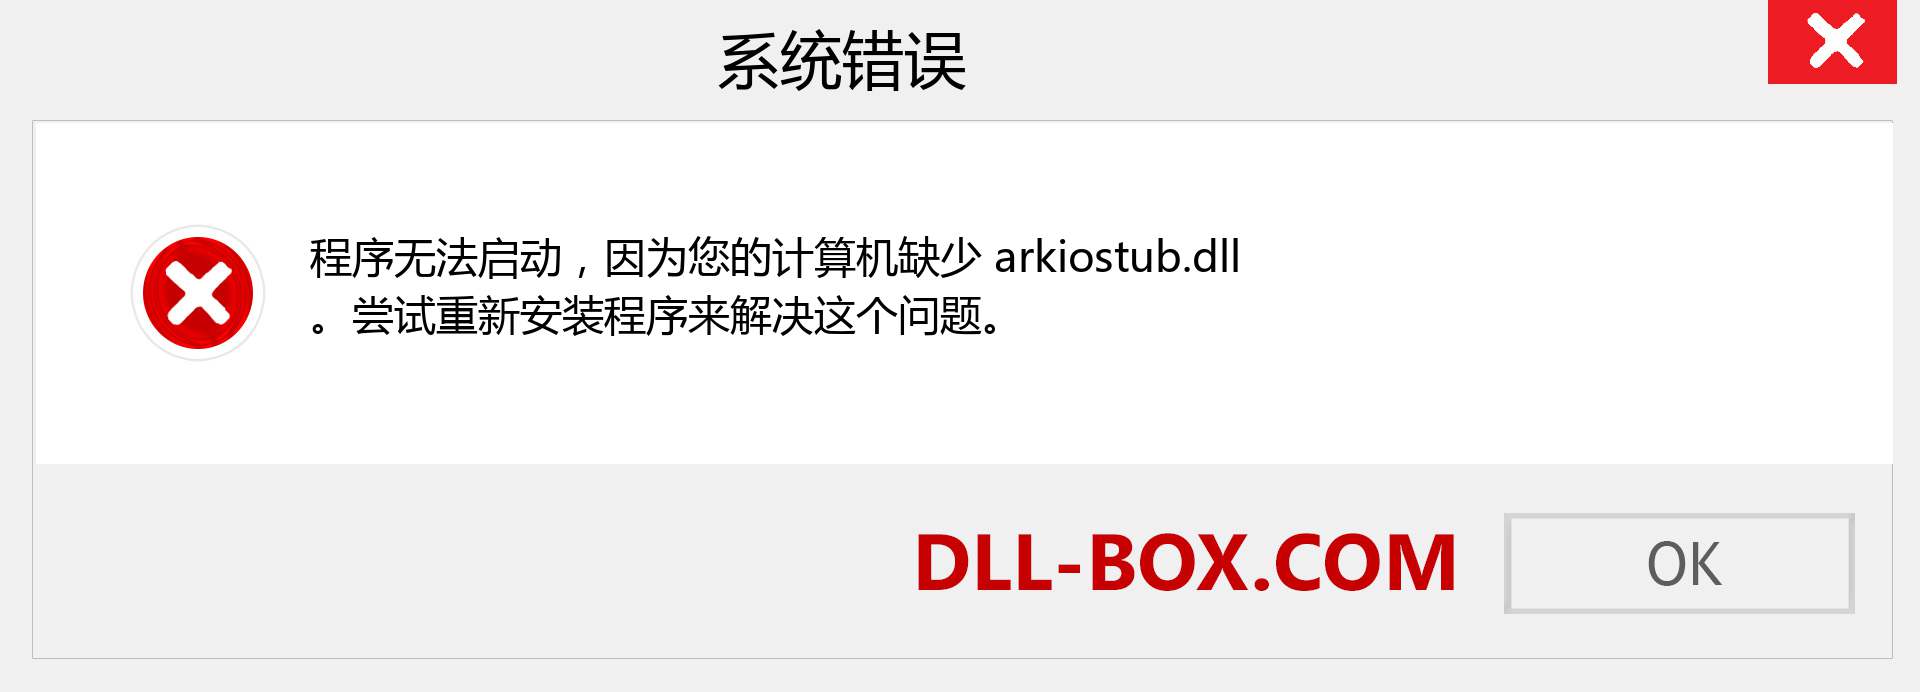 arkiostub.dll 文件丢失？。 适用于 Windows 7、8、10 的下载 - 修复 Windows、照片、图像上的 arkiostub dll 丢失错误